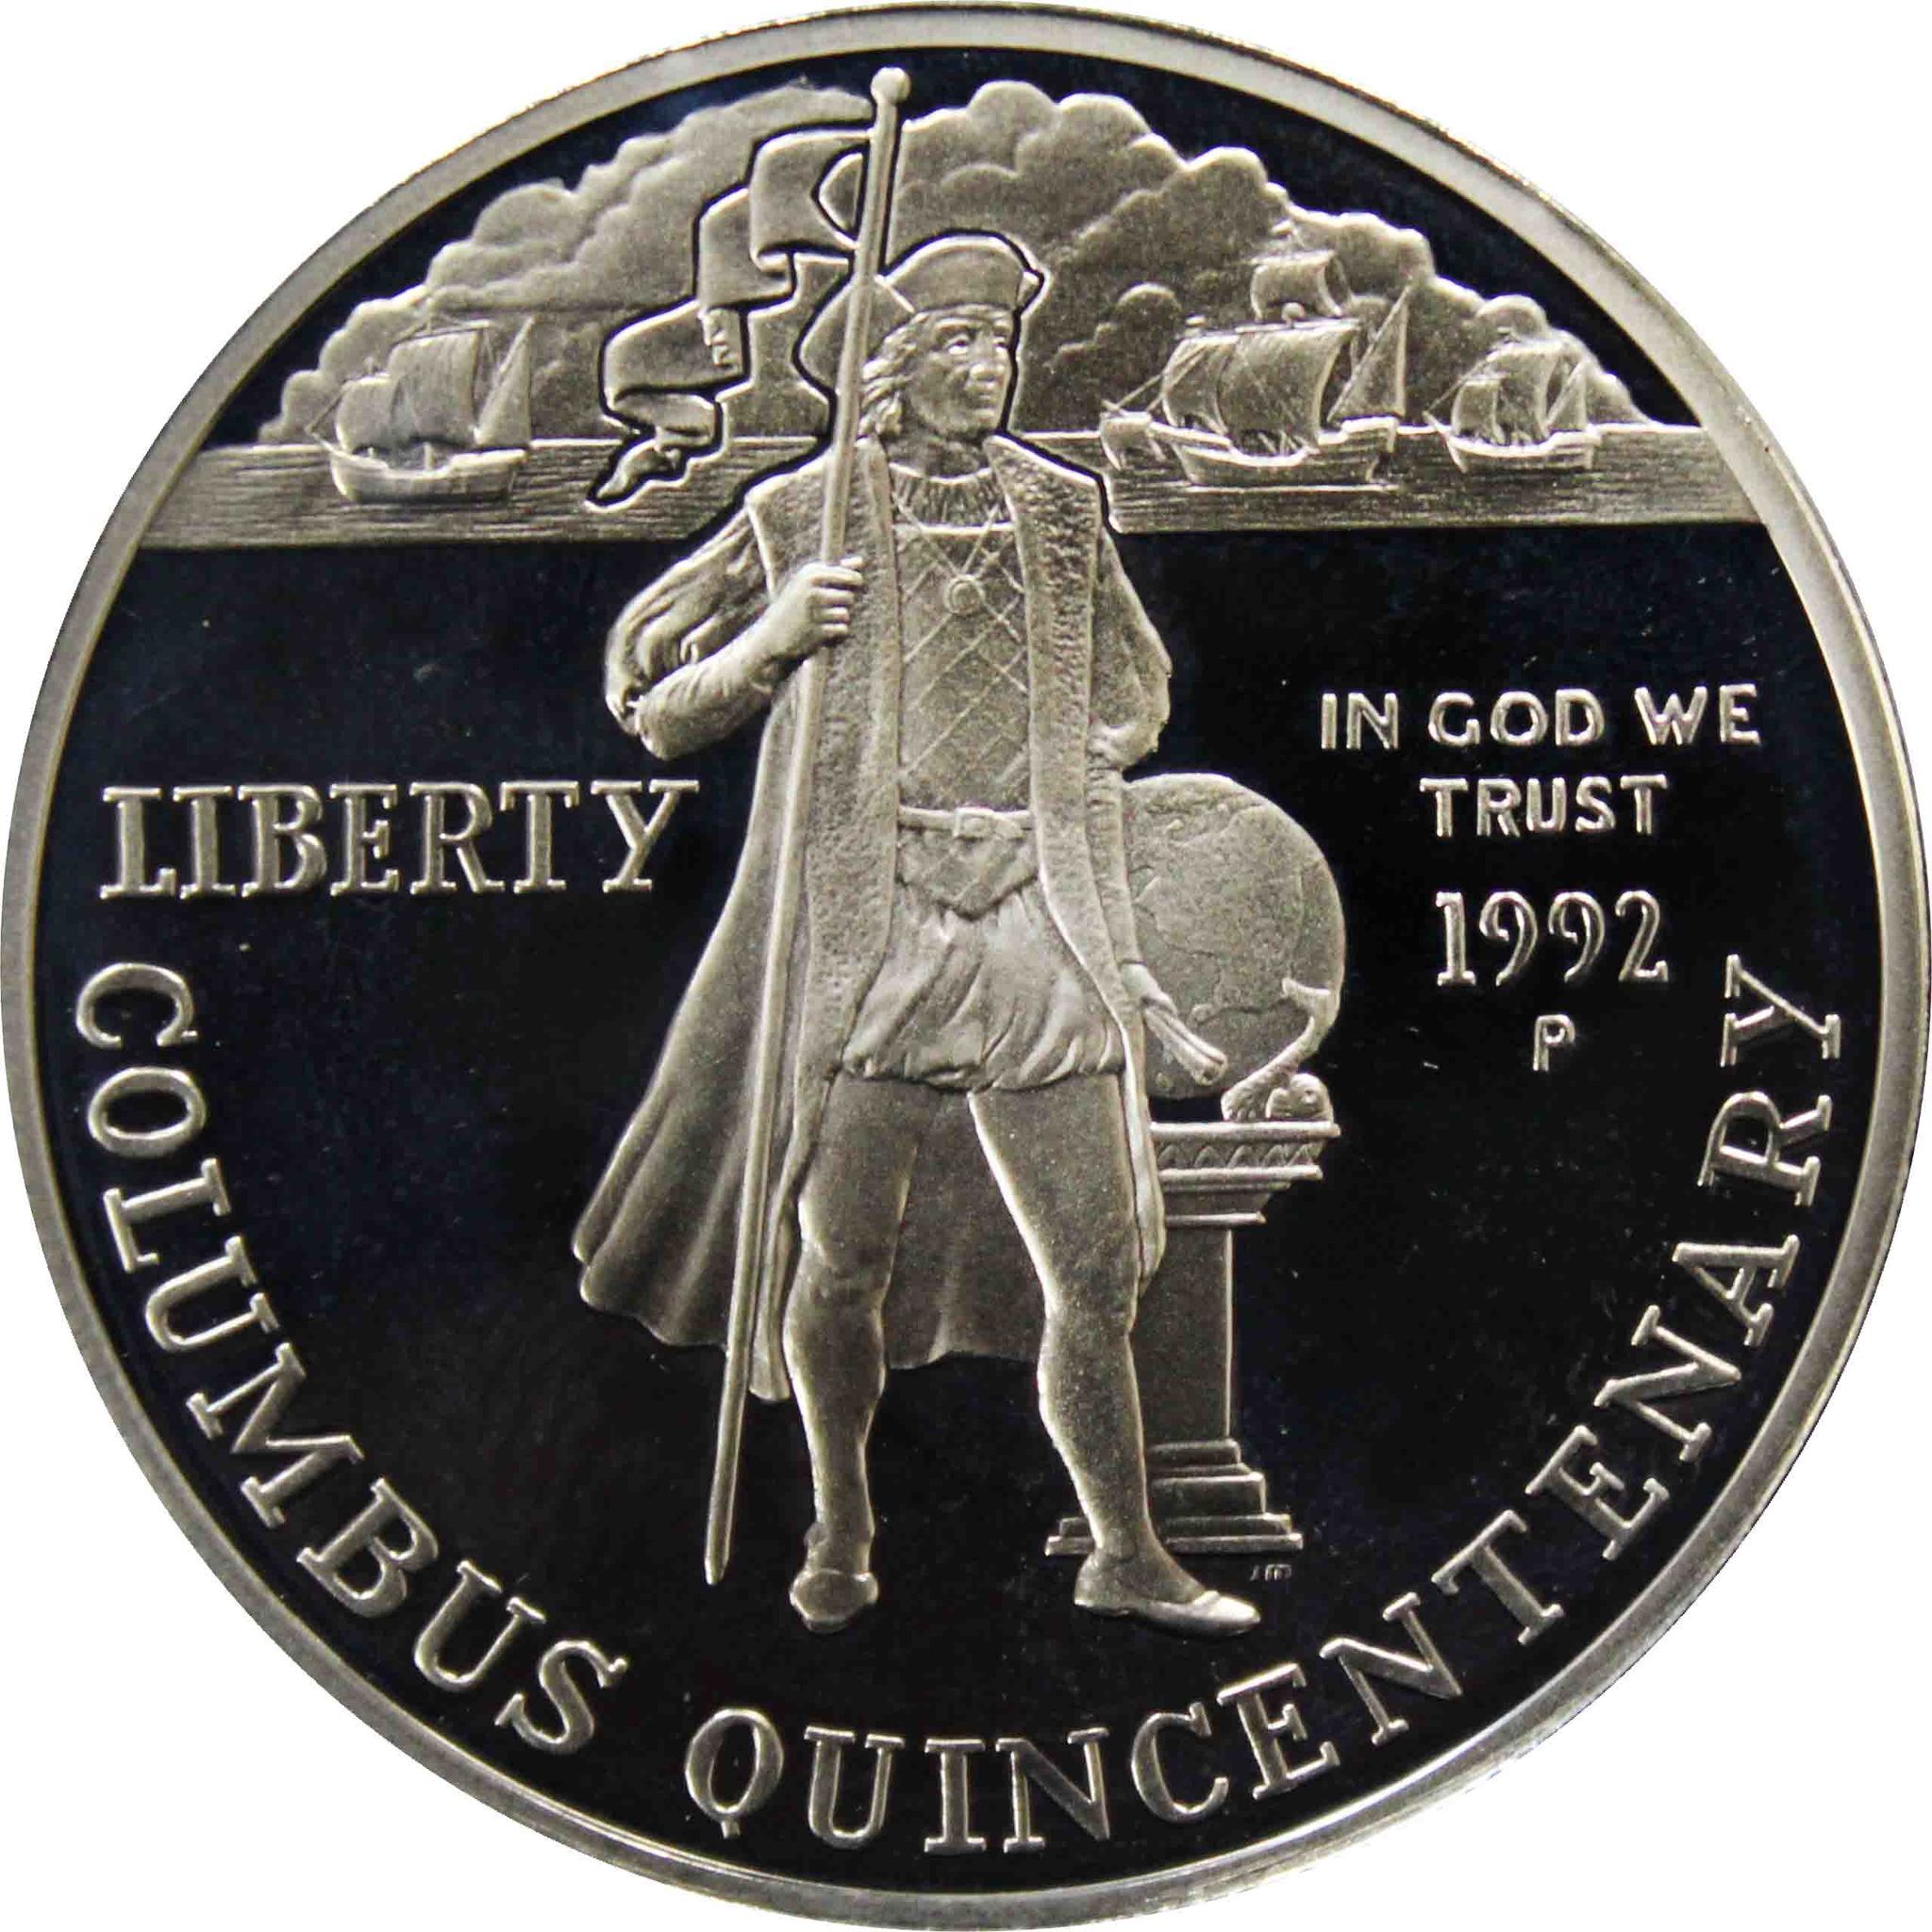 1992 p. США 1/2 доллара 1992 Колумб. Американский доллар 1992 года. Доллар 1992 серебро США монета Liberty. Серебряная монета Колумб.